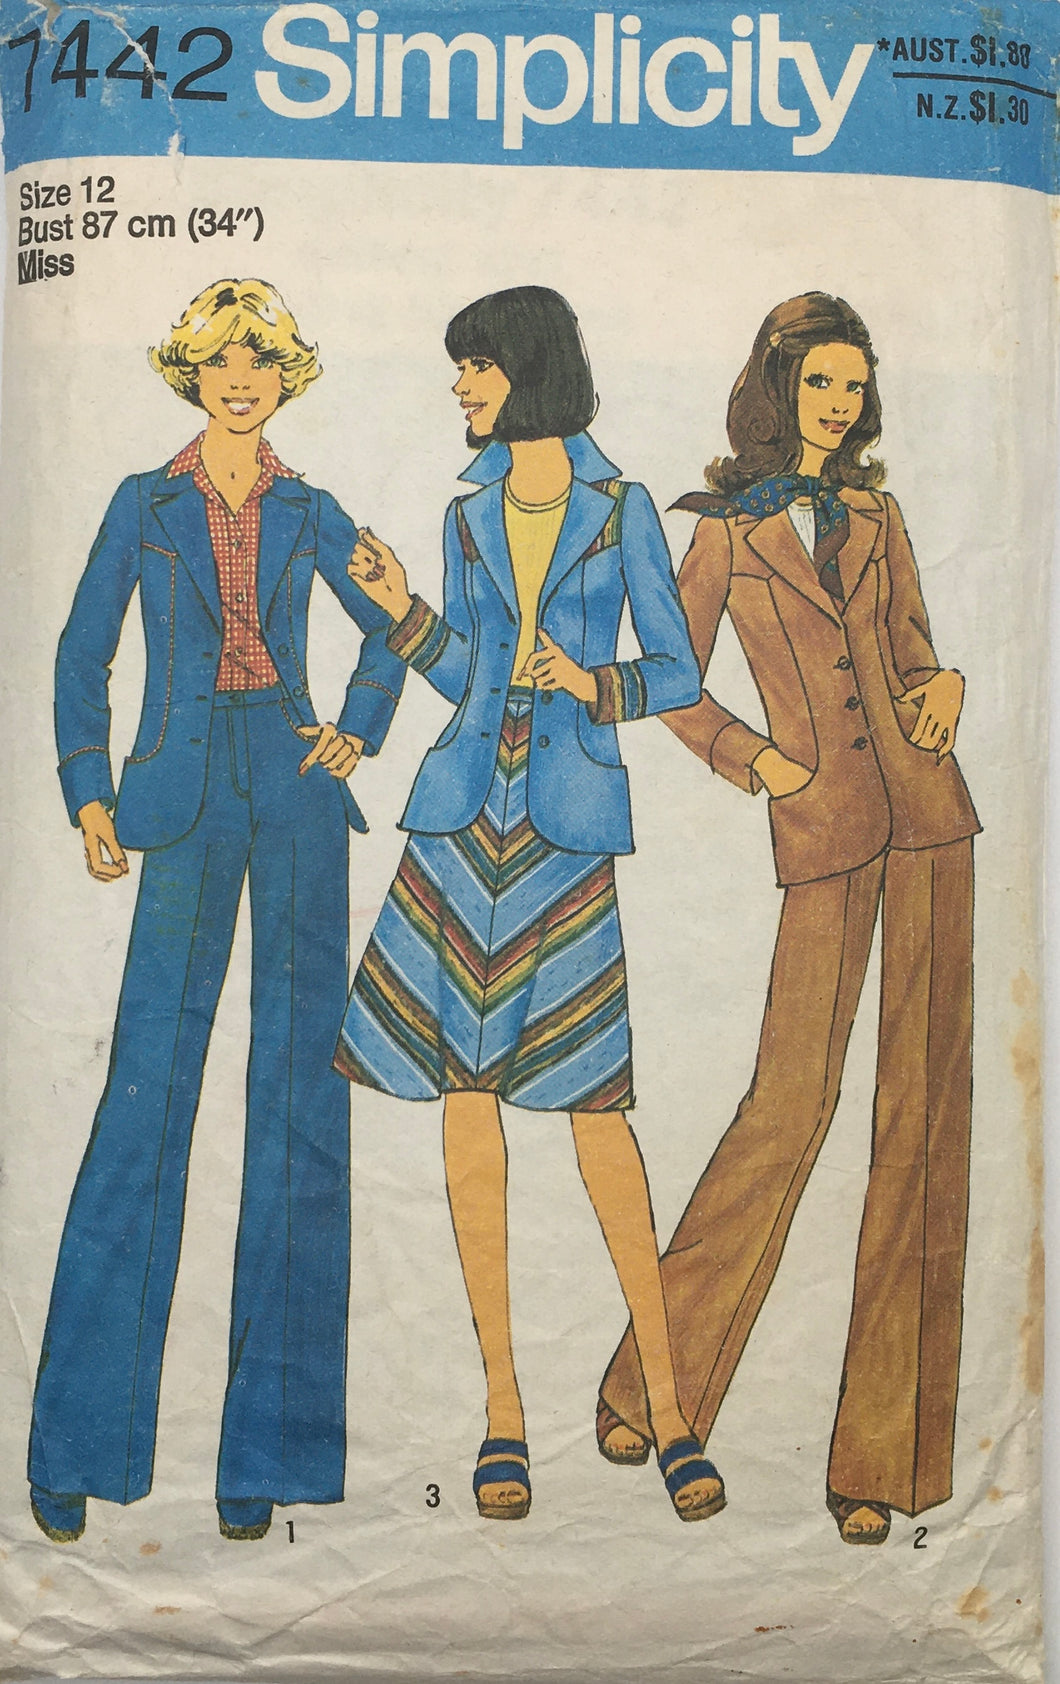 1976 Vintage Sewing Pattern: Simplicity 7442